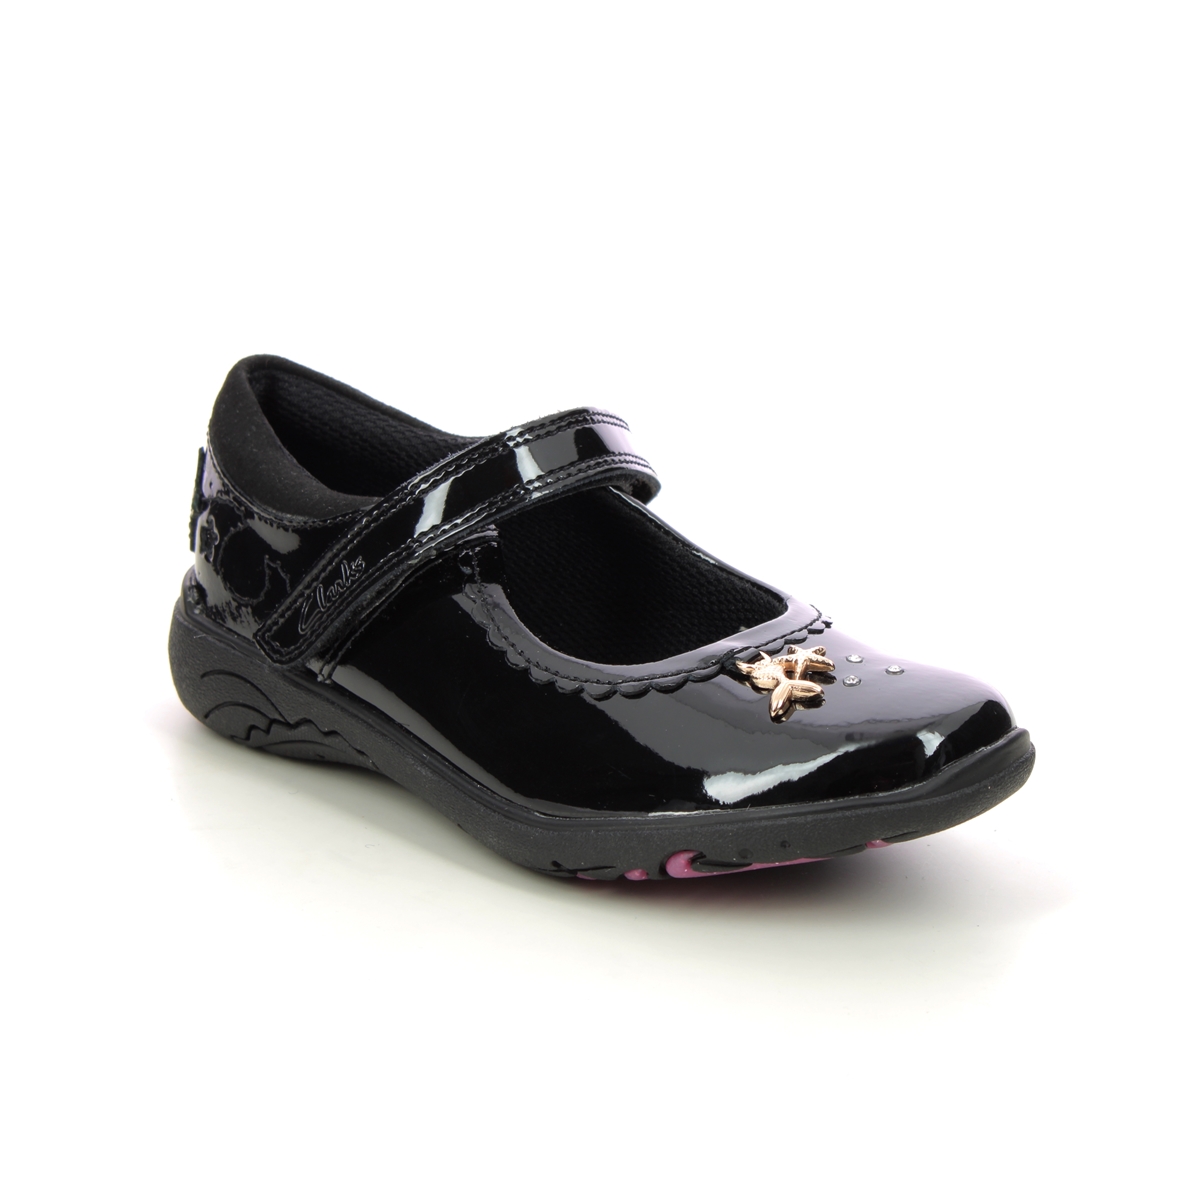 Clarks Relda Sea K Mary Jane Black Patent Kids Girls School Shoes 722416F In Size 11.5 In Plain Black Patent F Width Fitting Regular Fit For School Fo